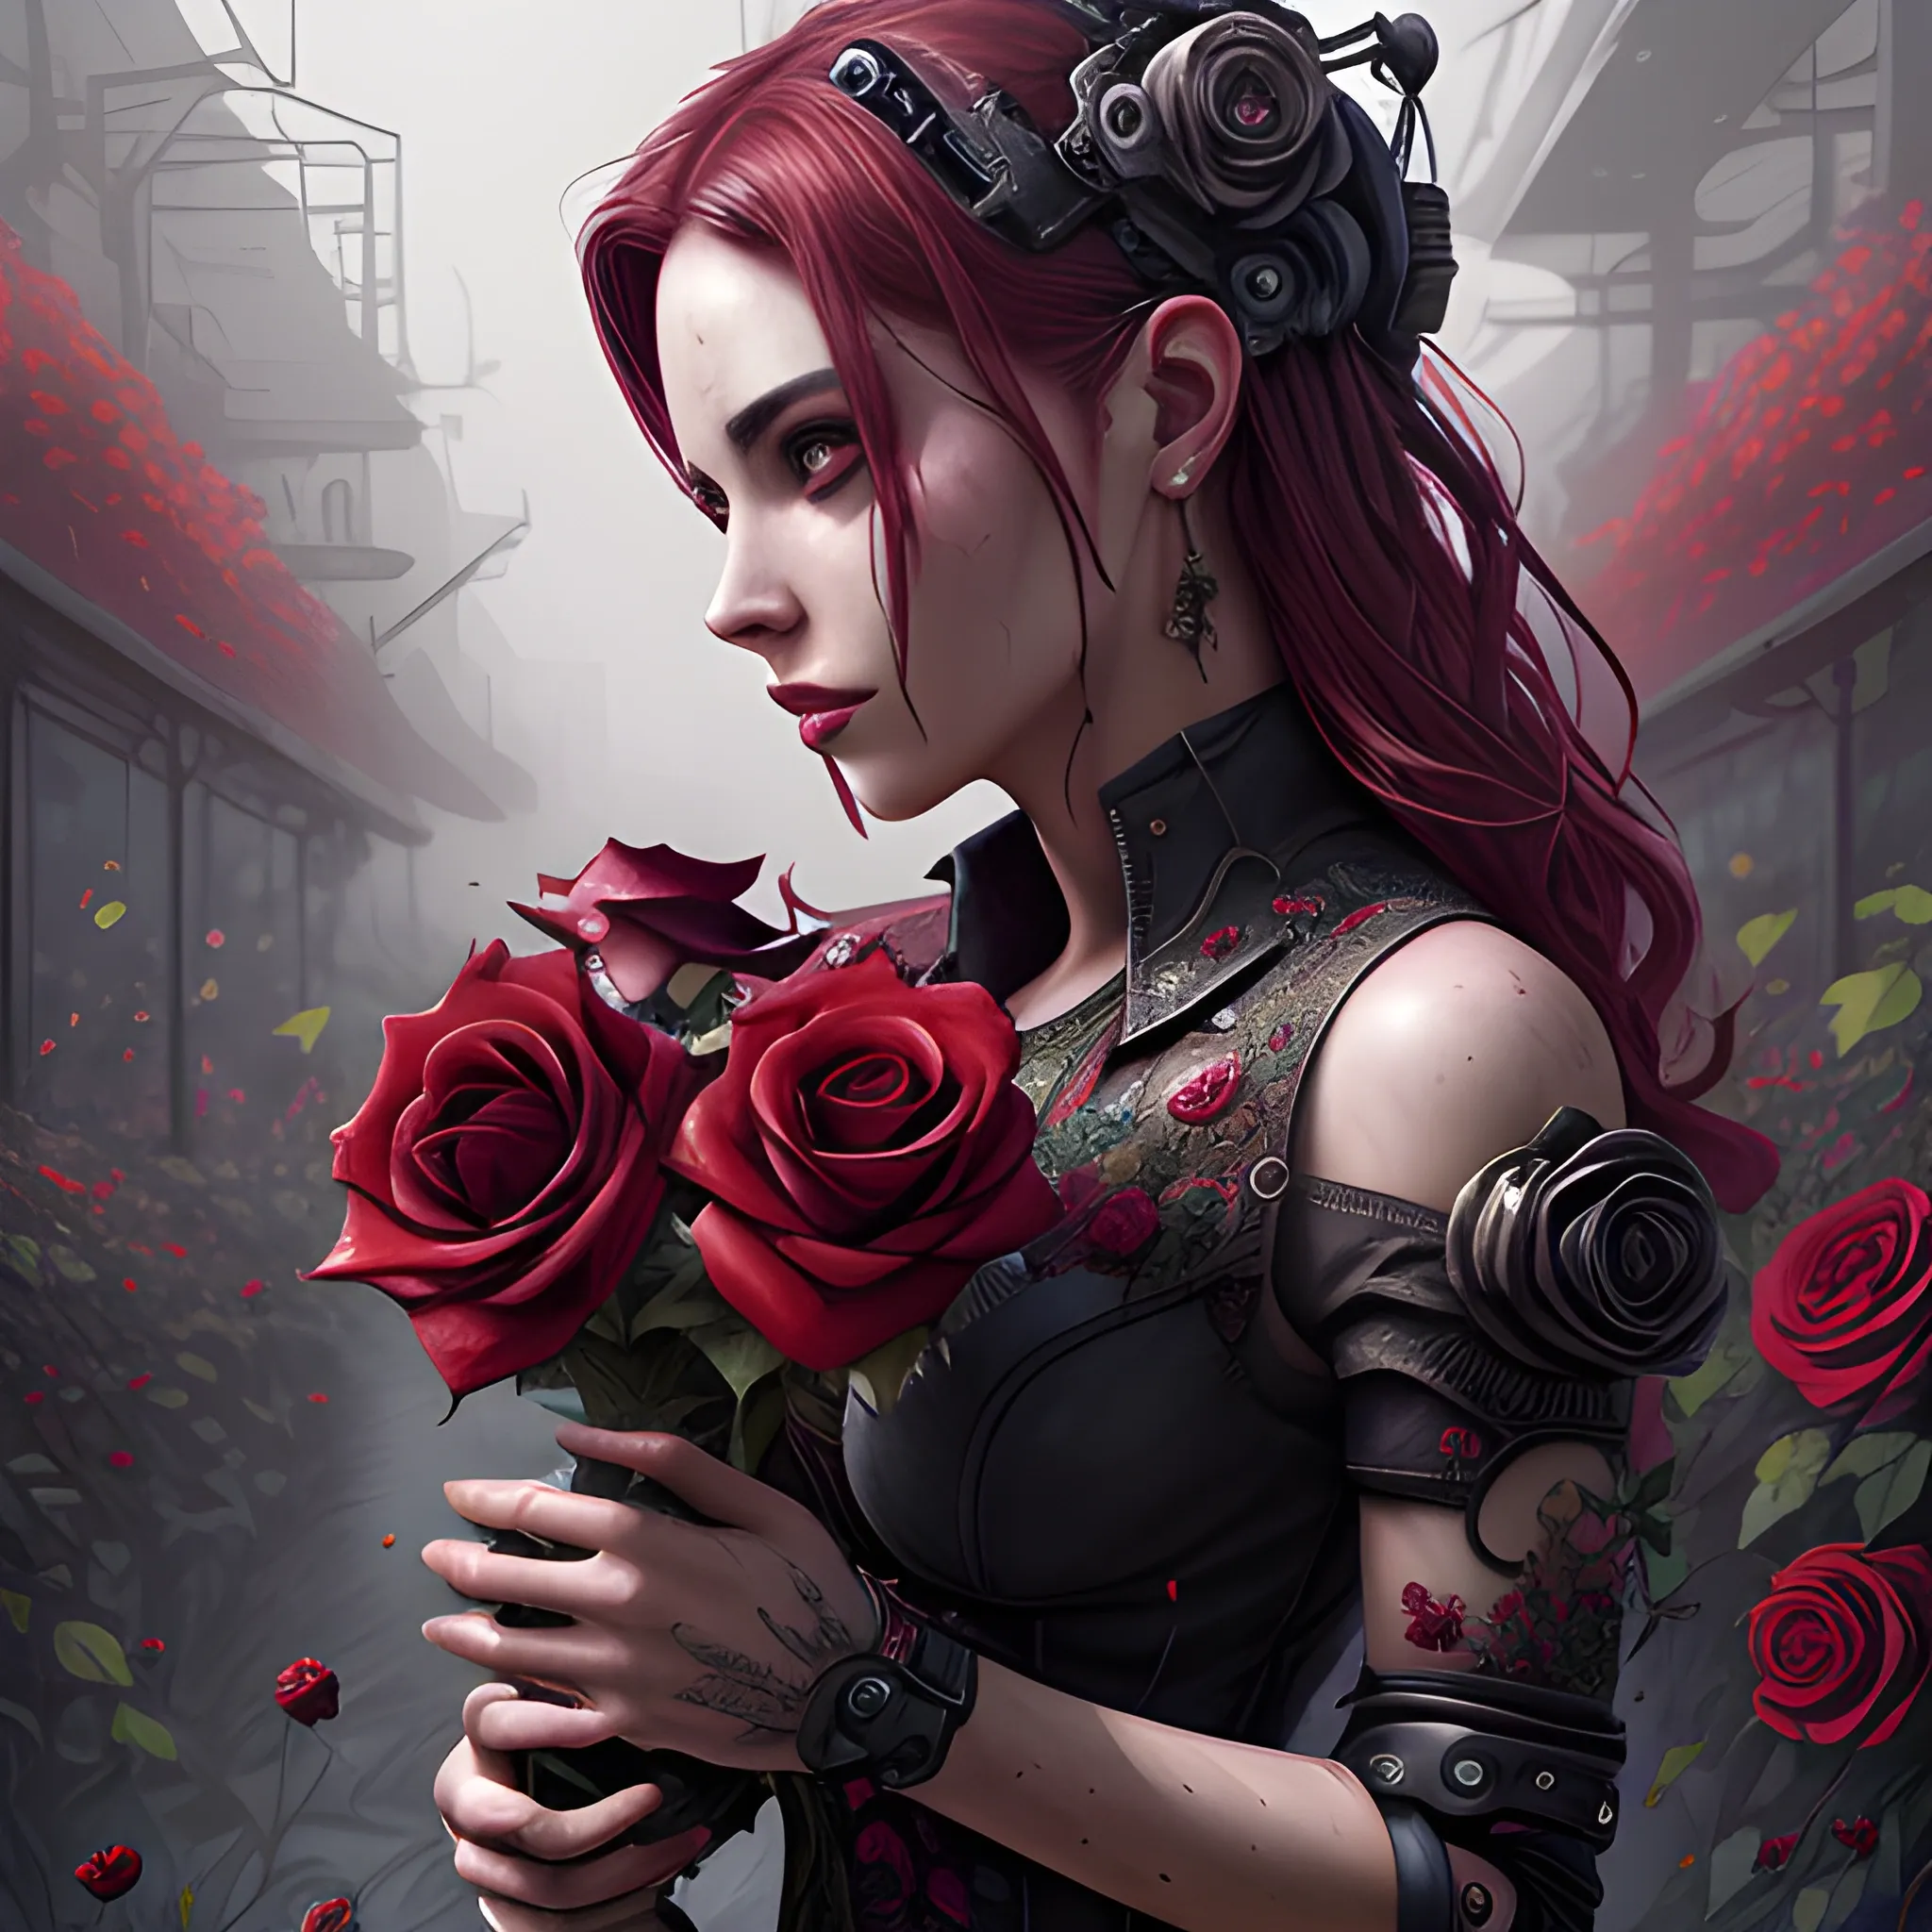 splash art, detailed painting of Botanic Beauty, dark red roses, field flowers, a cyberpunk art, HD, intricate details, sharp focus, magic, dreamy